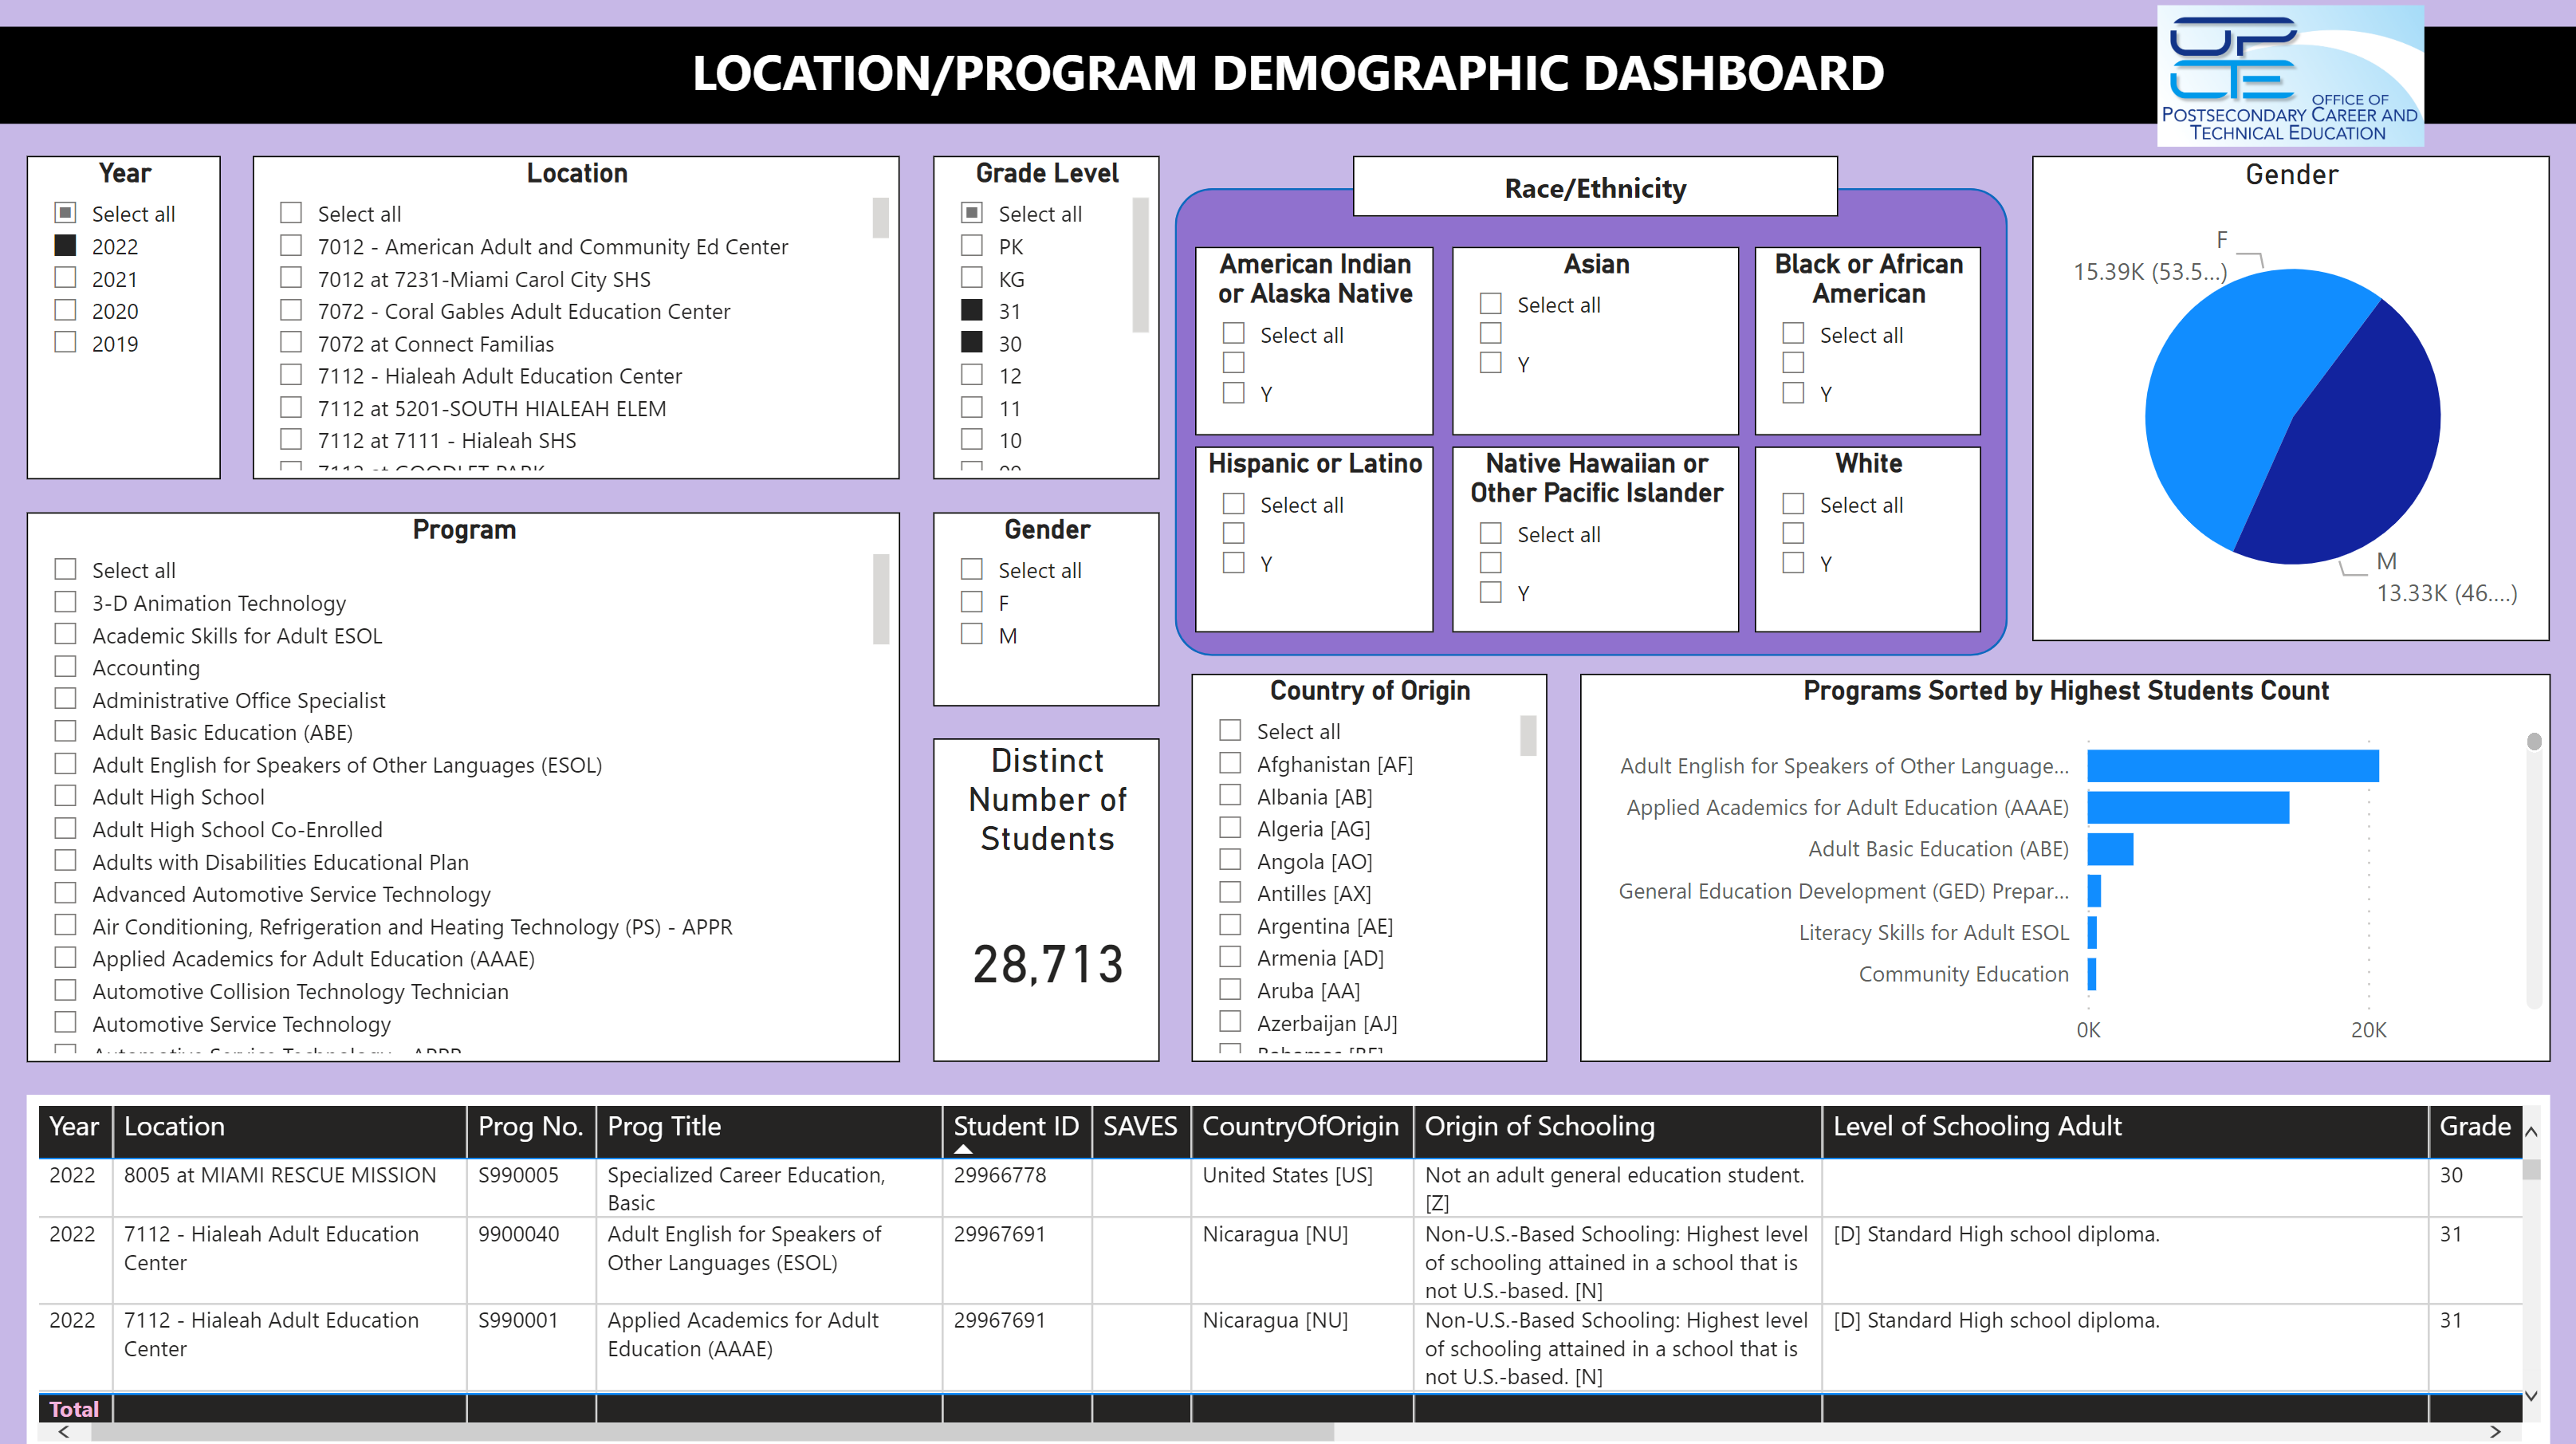 demodash - Dashboard Reports